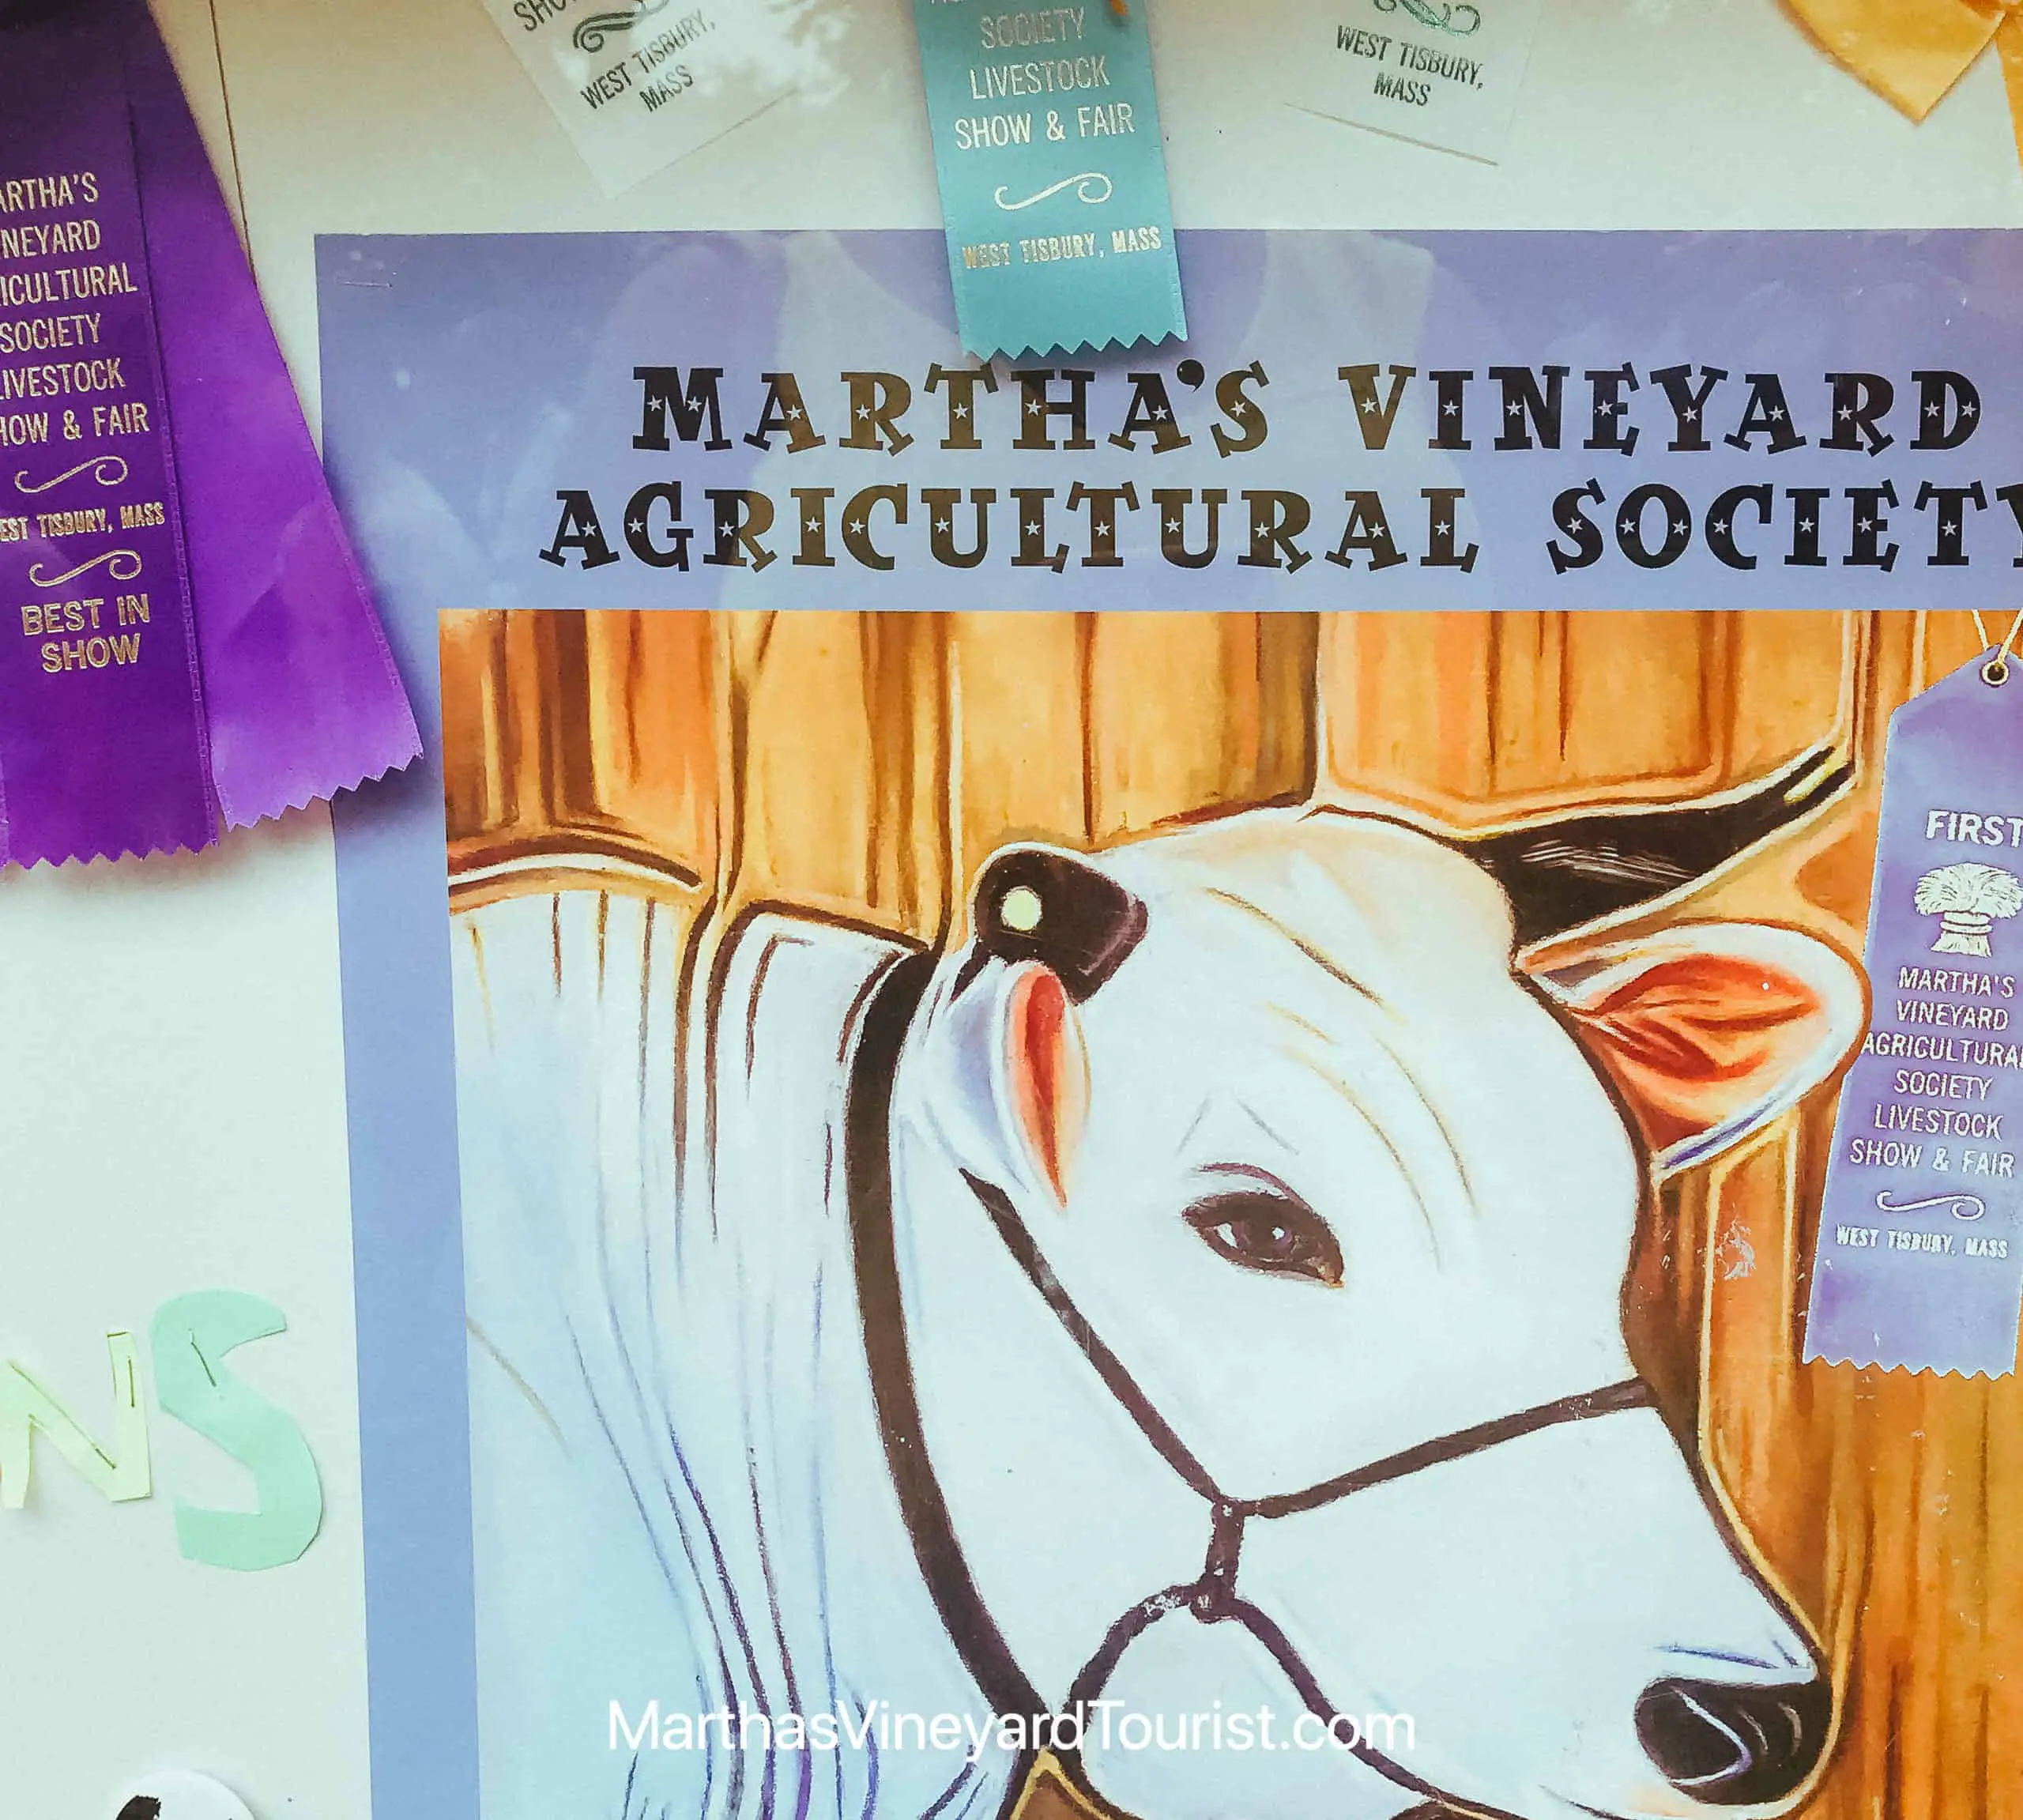 Martha’s Vineyard Agricultural Society poster and ribbons